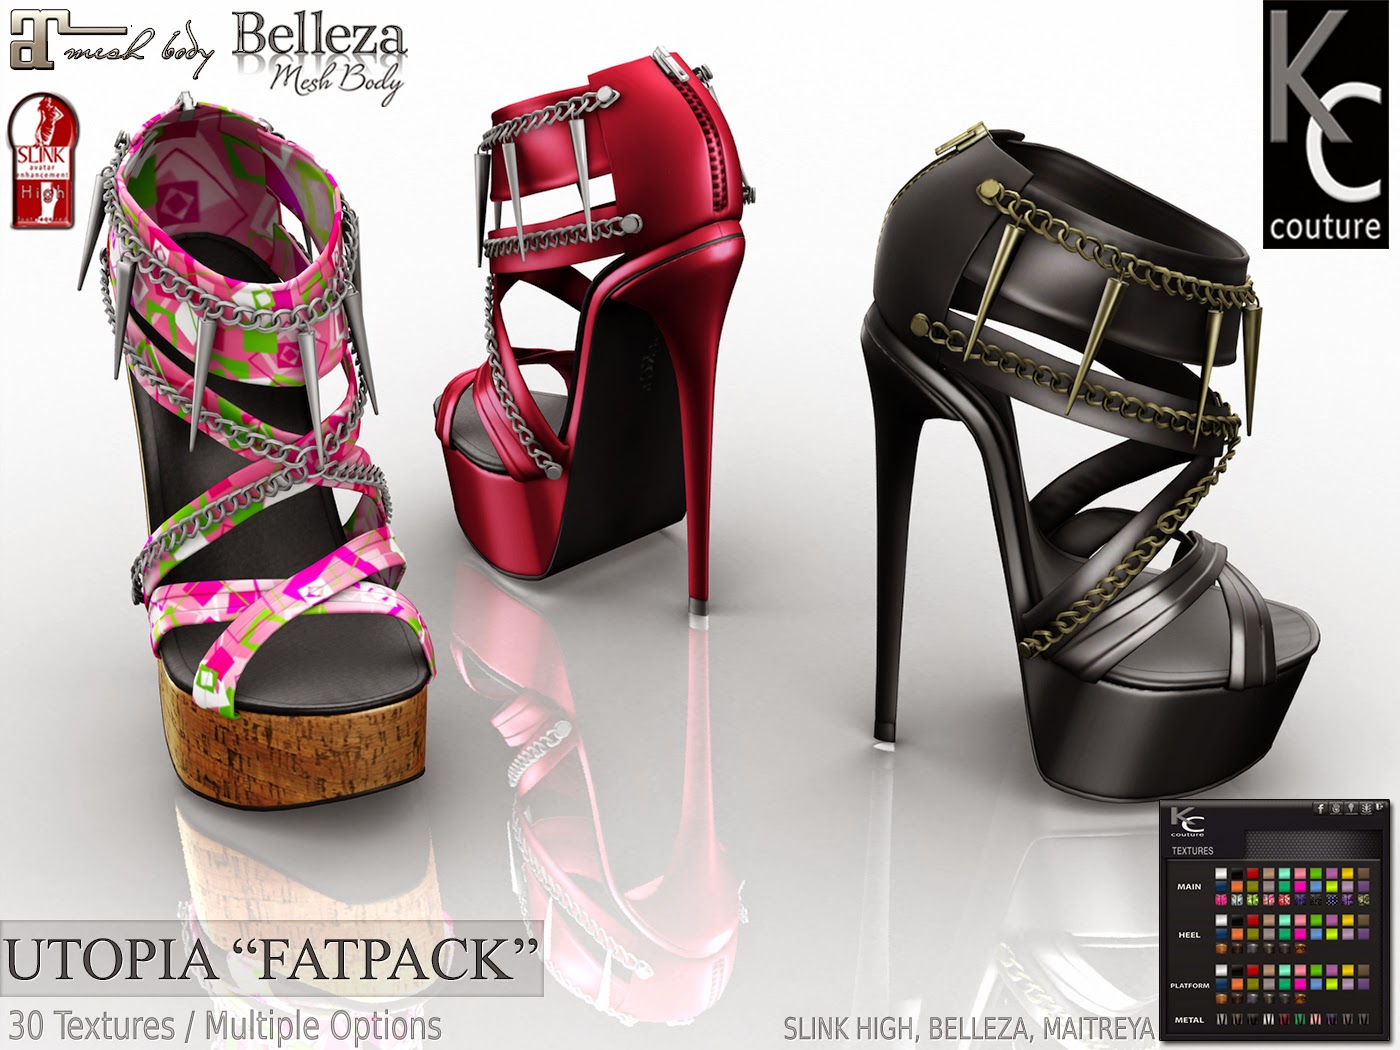 .:KC:. Couture: UTOPIA HEELS FOR SLINK HIGH, MAITREYA & BELLEZA / FATPACK